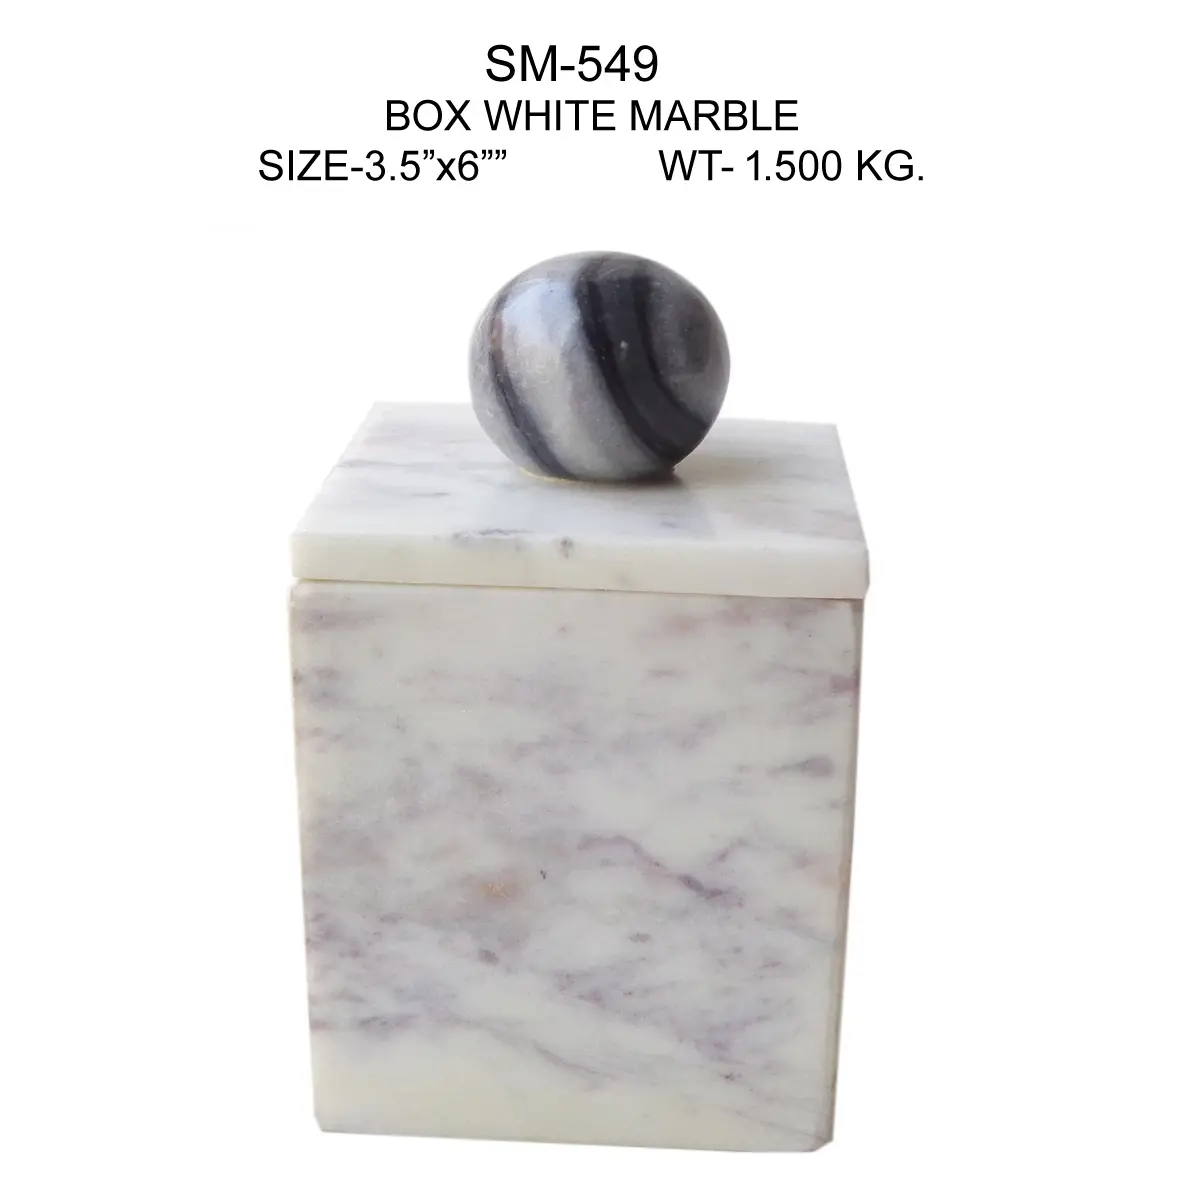 WHITE MARBLE BOx STYLE-
6